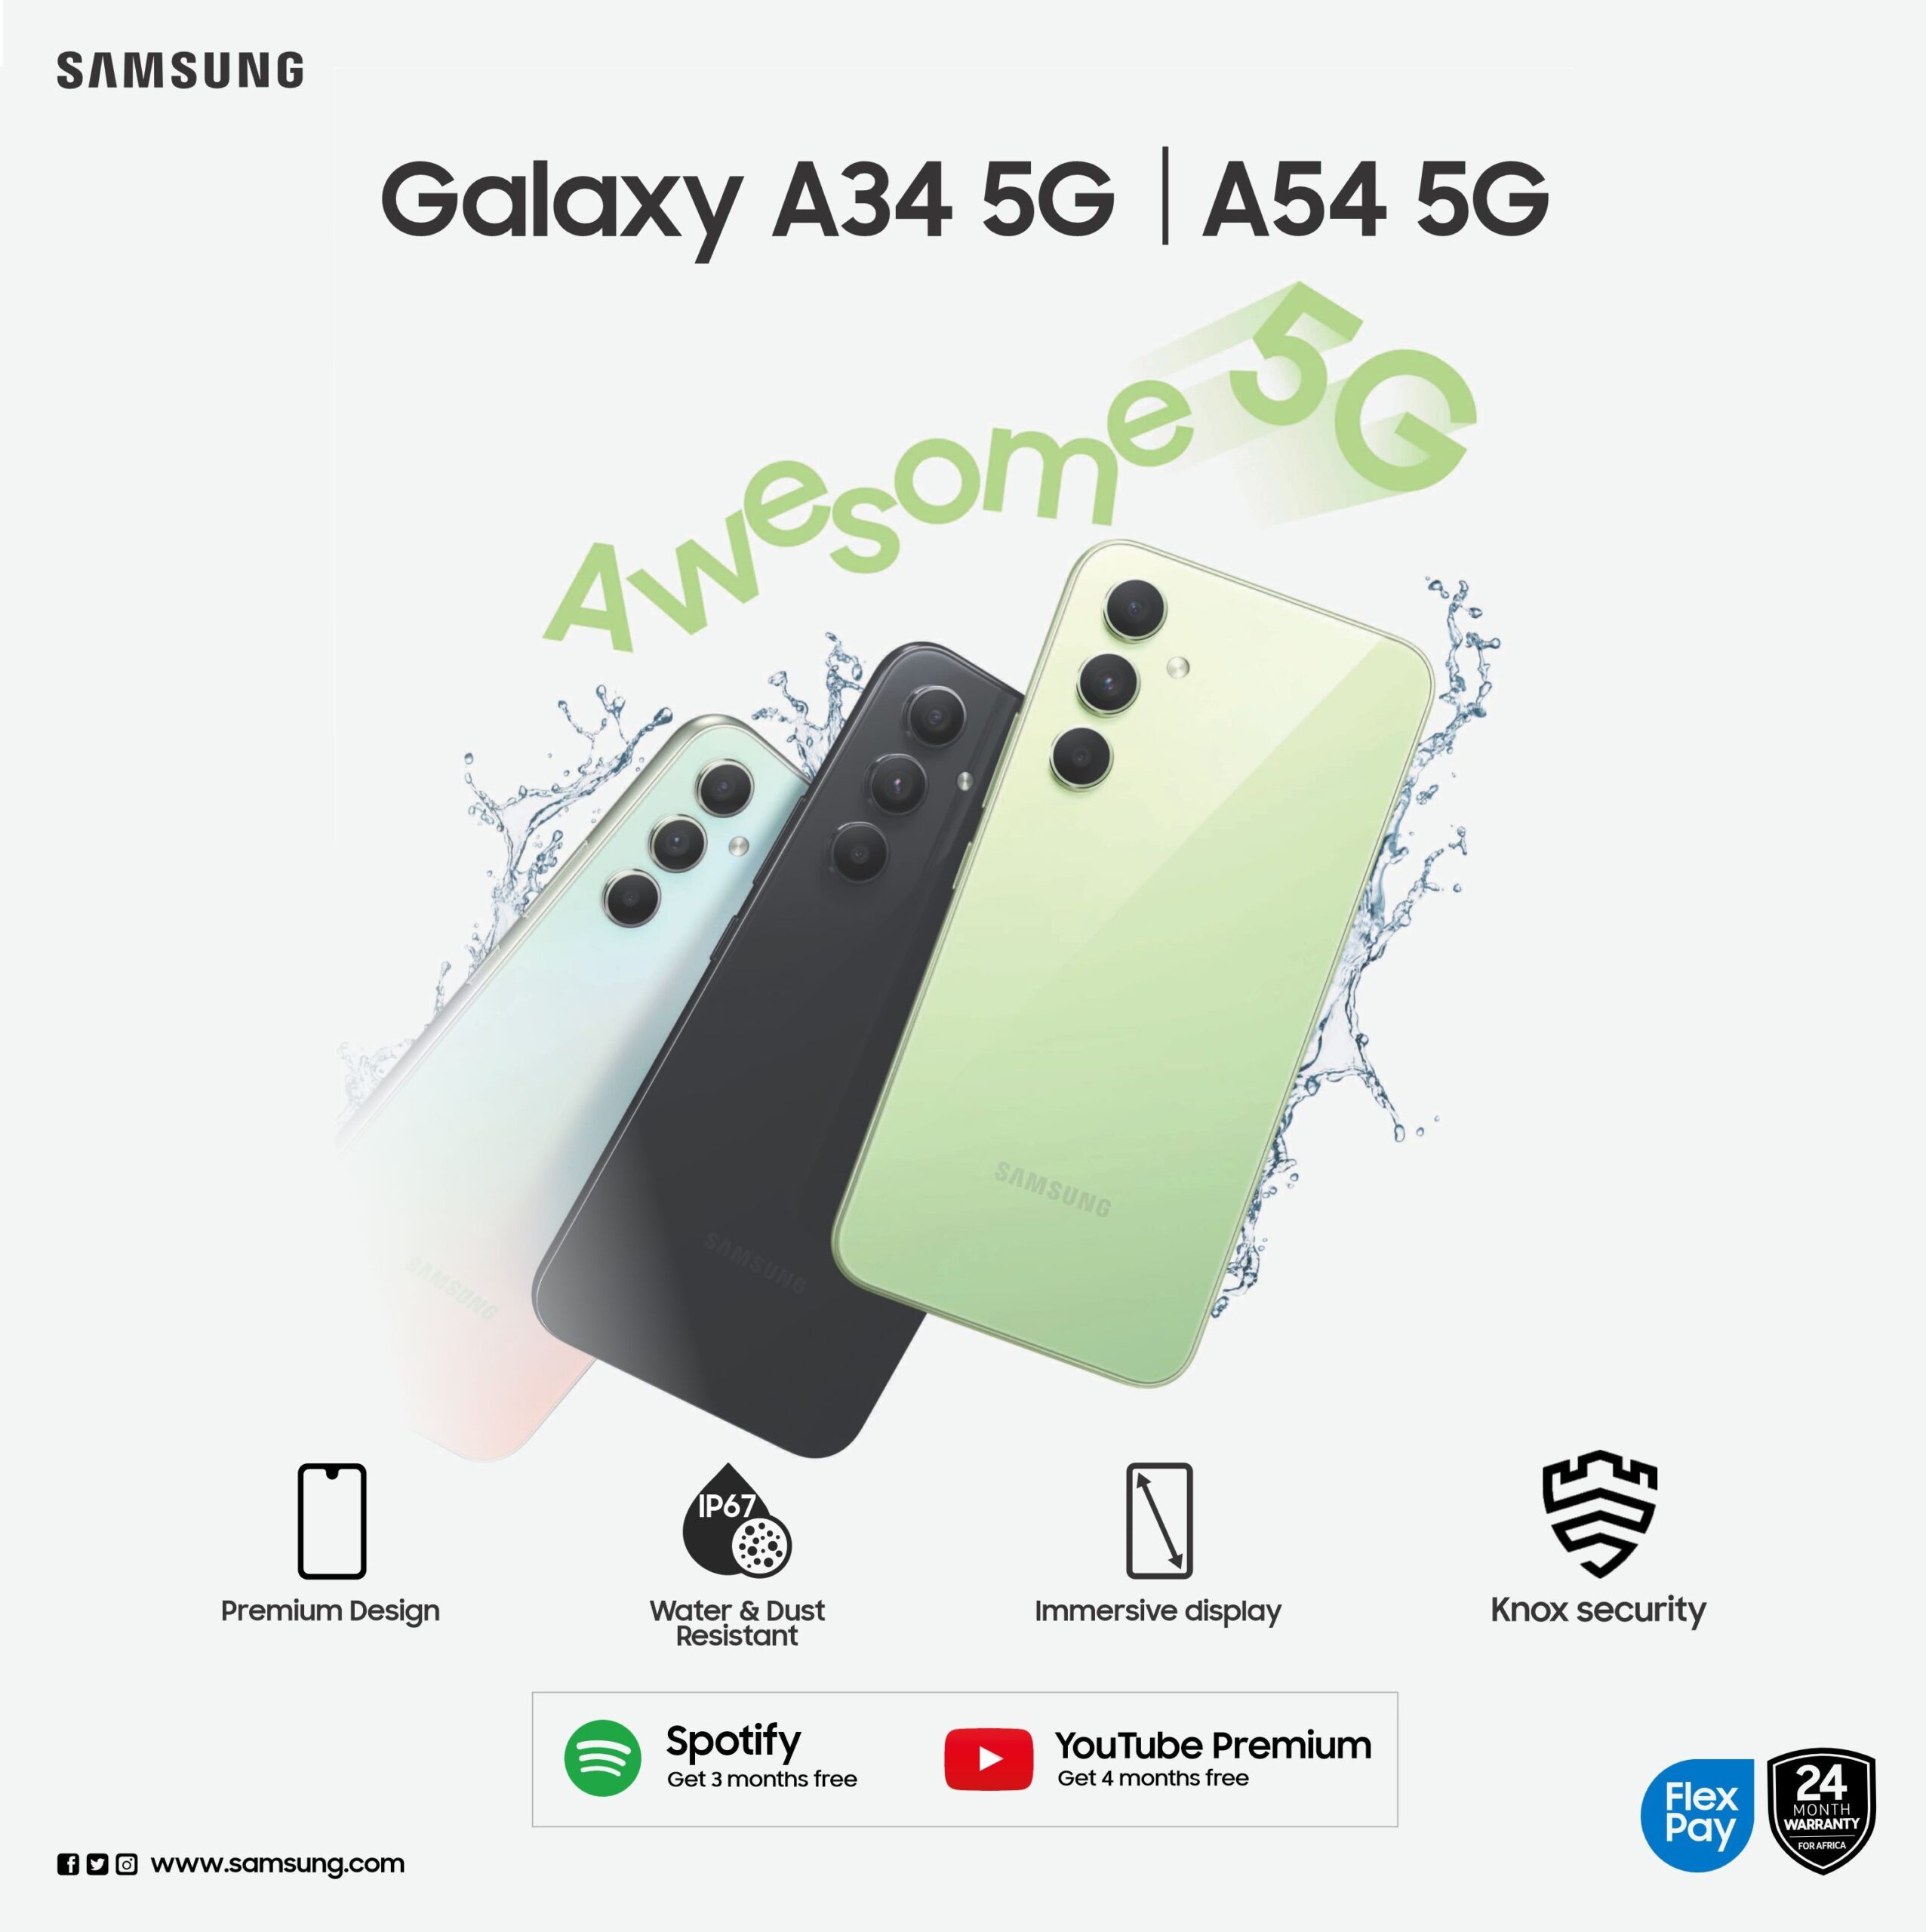 Price of Samsung Galaxy A54 %G, A34 5G